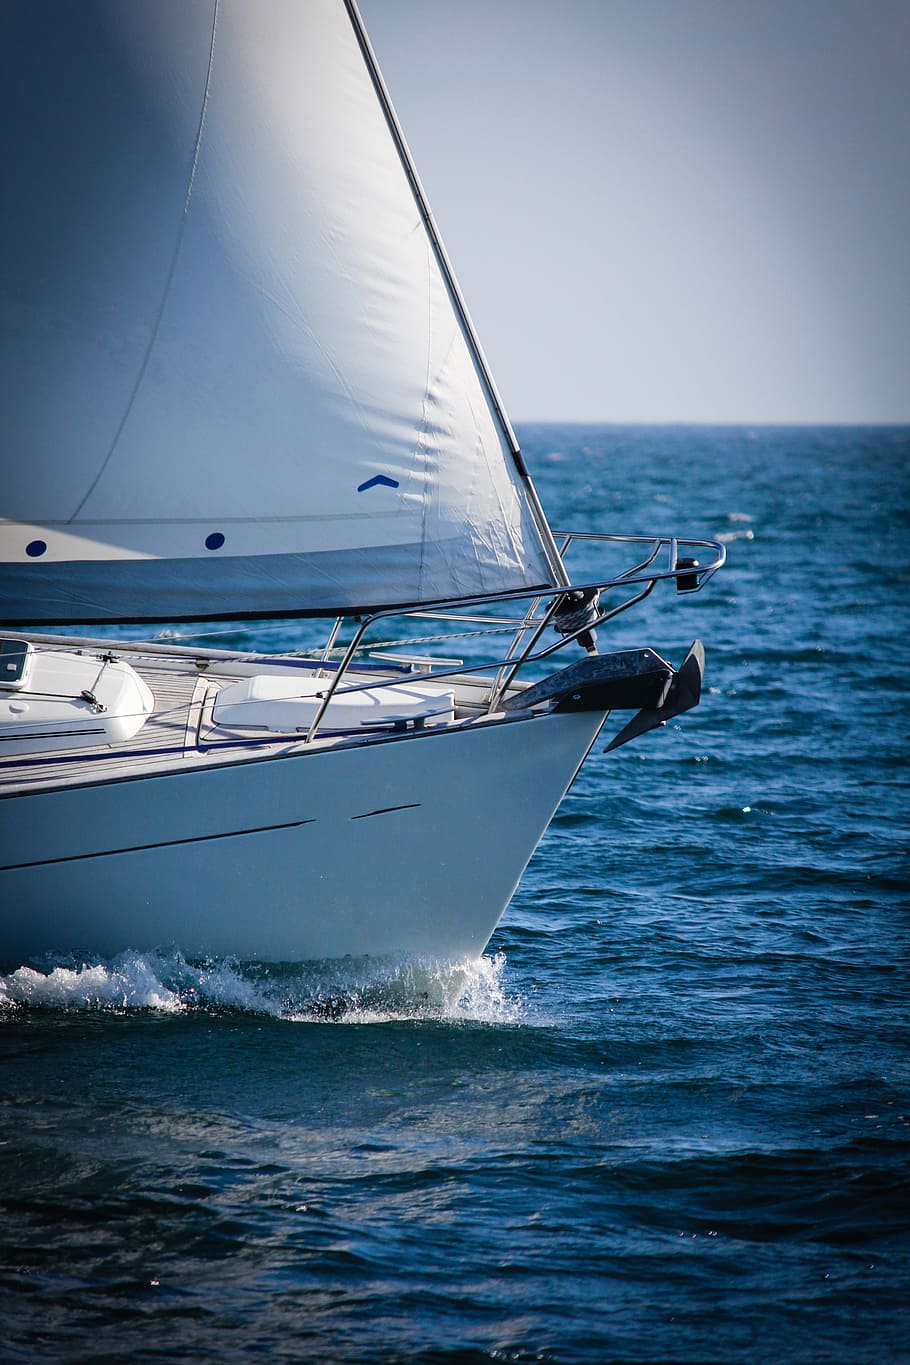 HD wallpaper: sailboat on calm body of water, Yacht, Sailing, Sea, Boat,  ocean | Wallpaper Flare